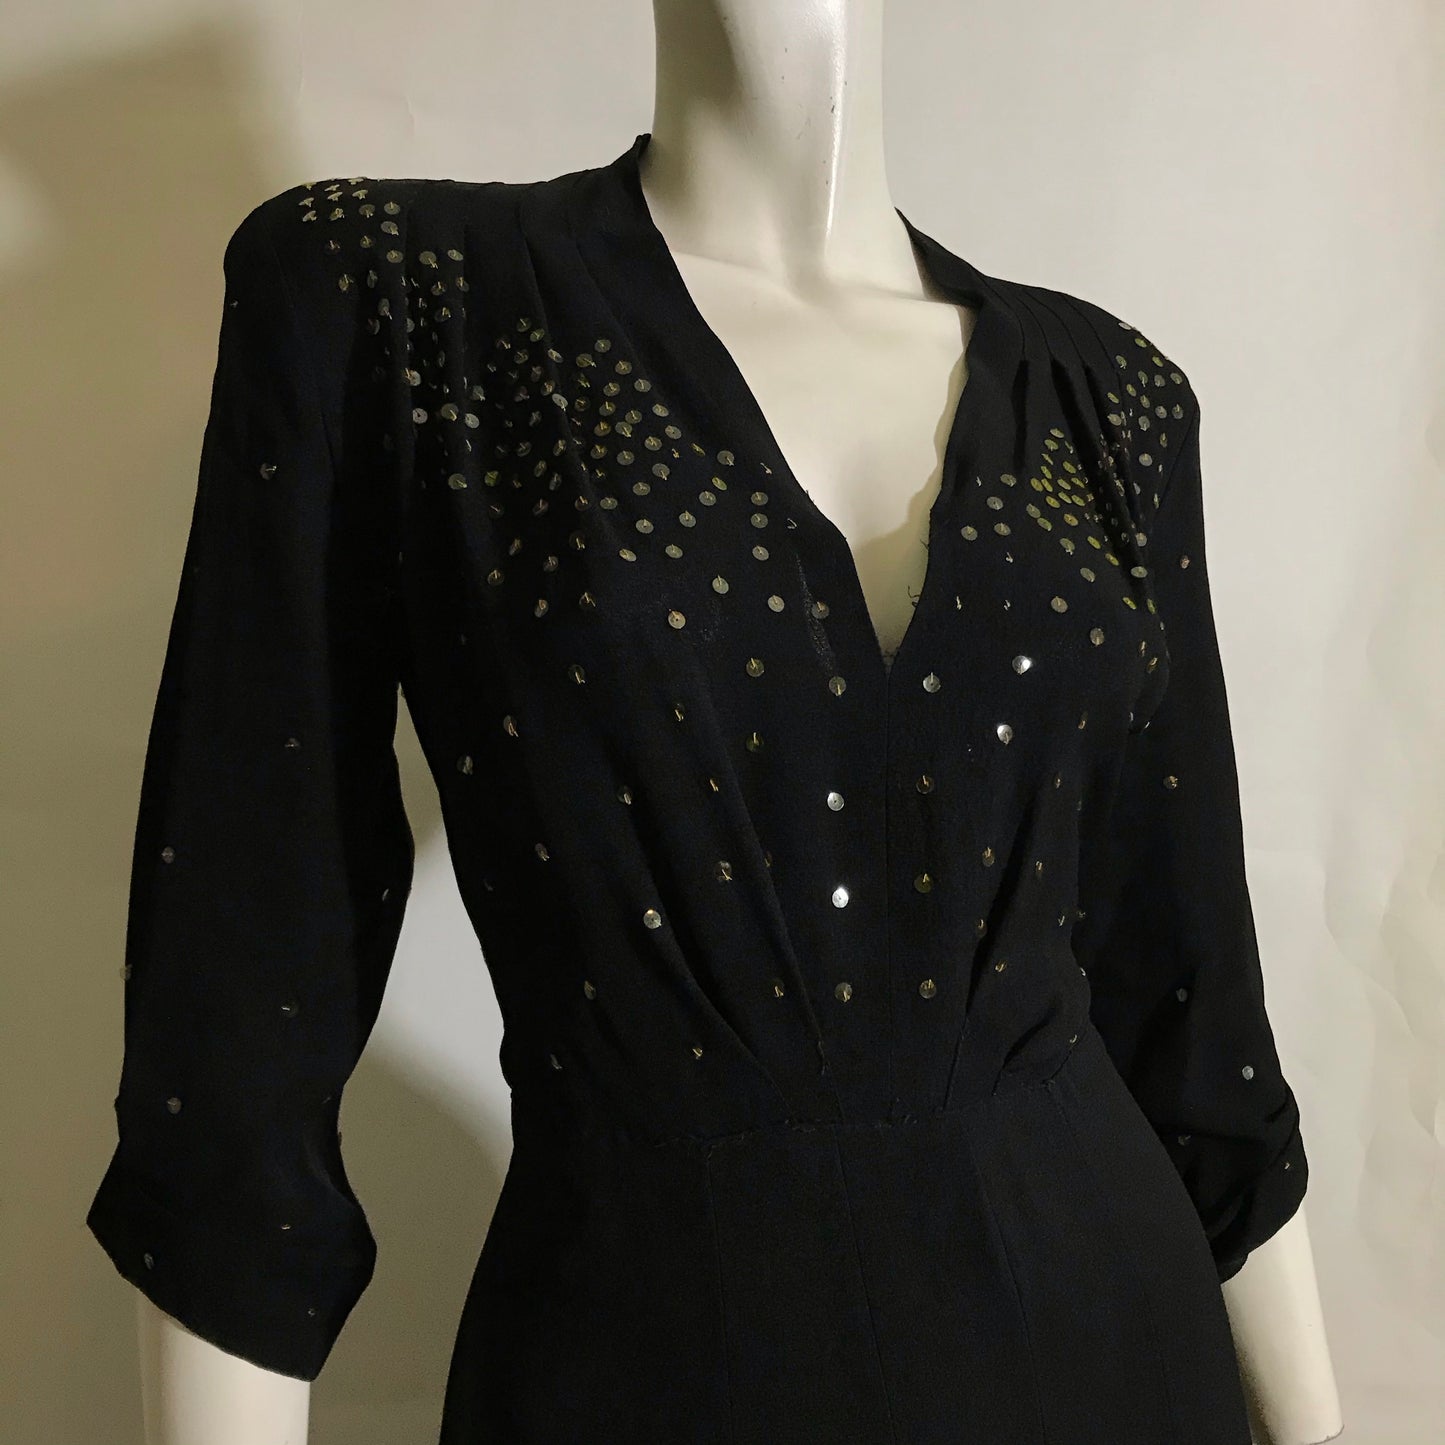 Black Crepe Rayon Evening Dress with Gold Gelatin Sequins circa 1940s